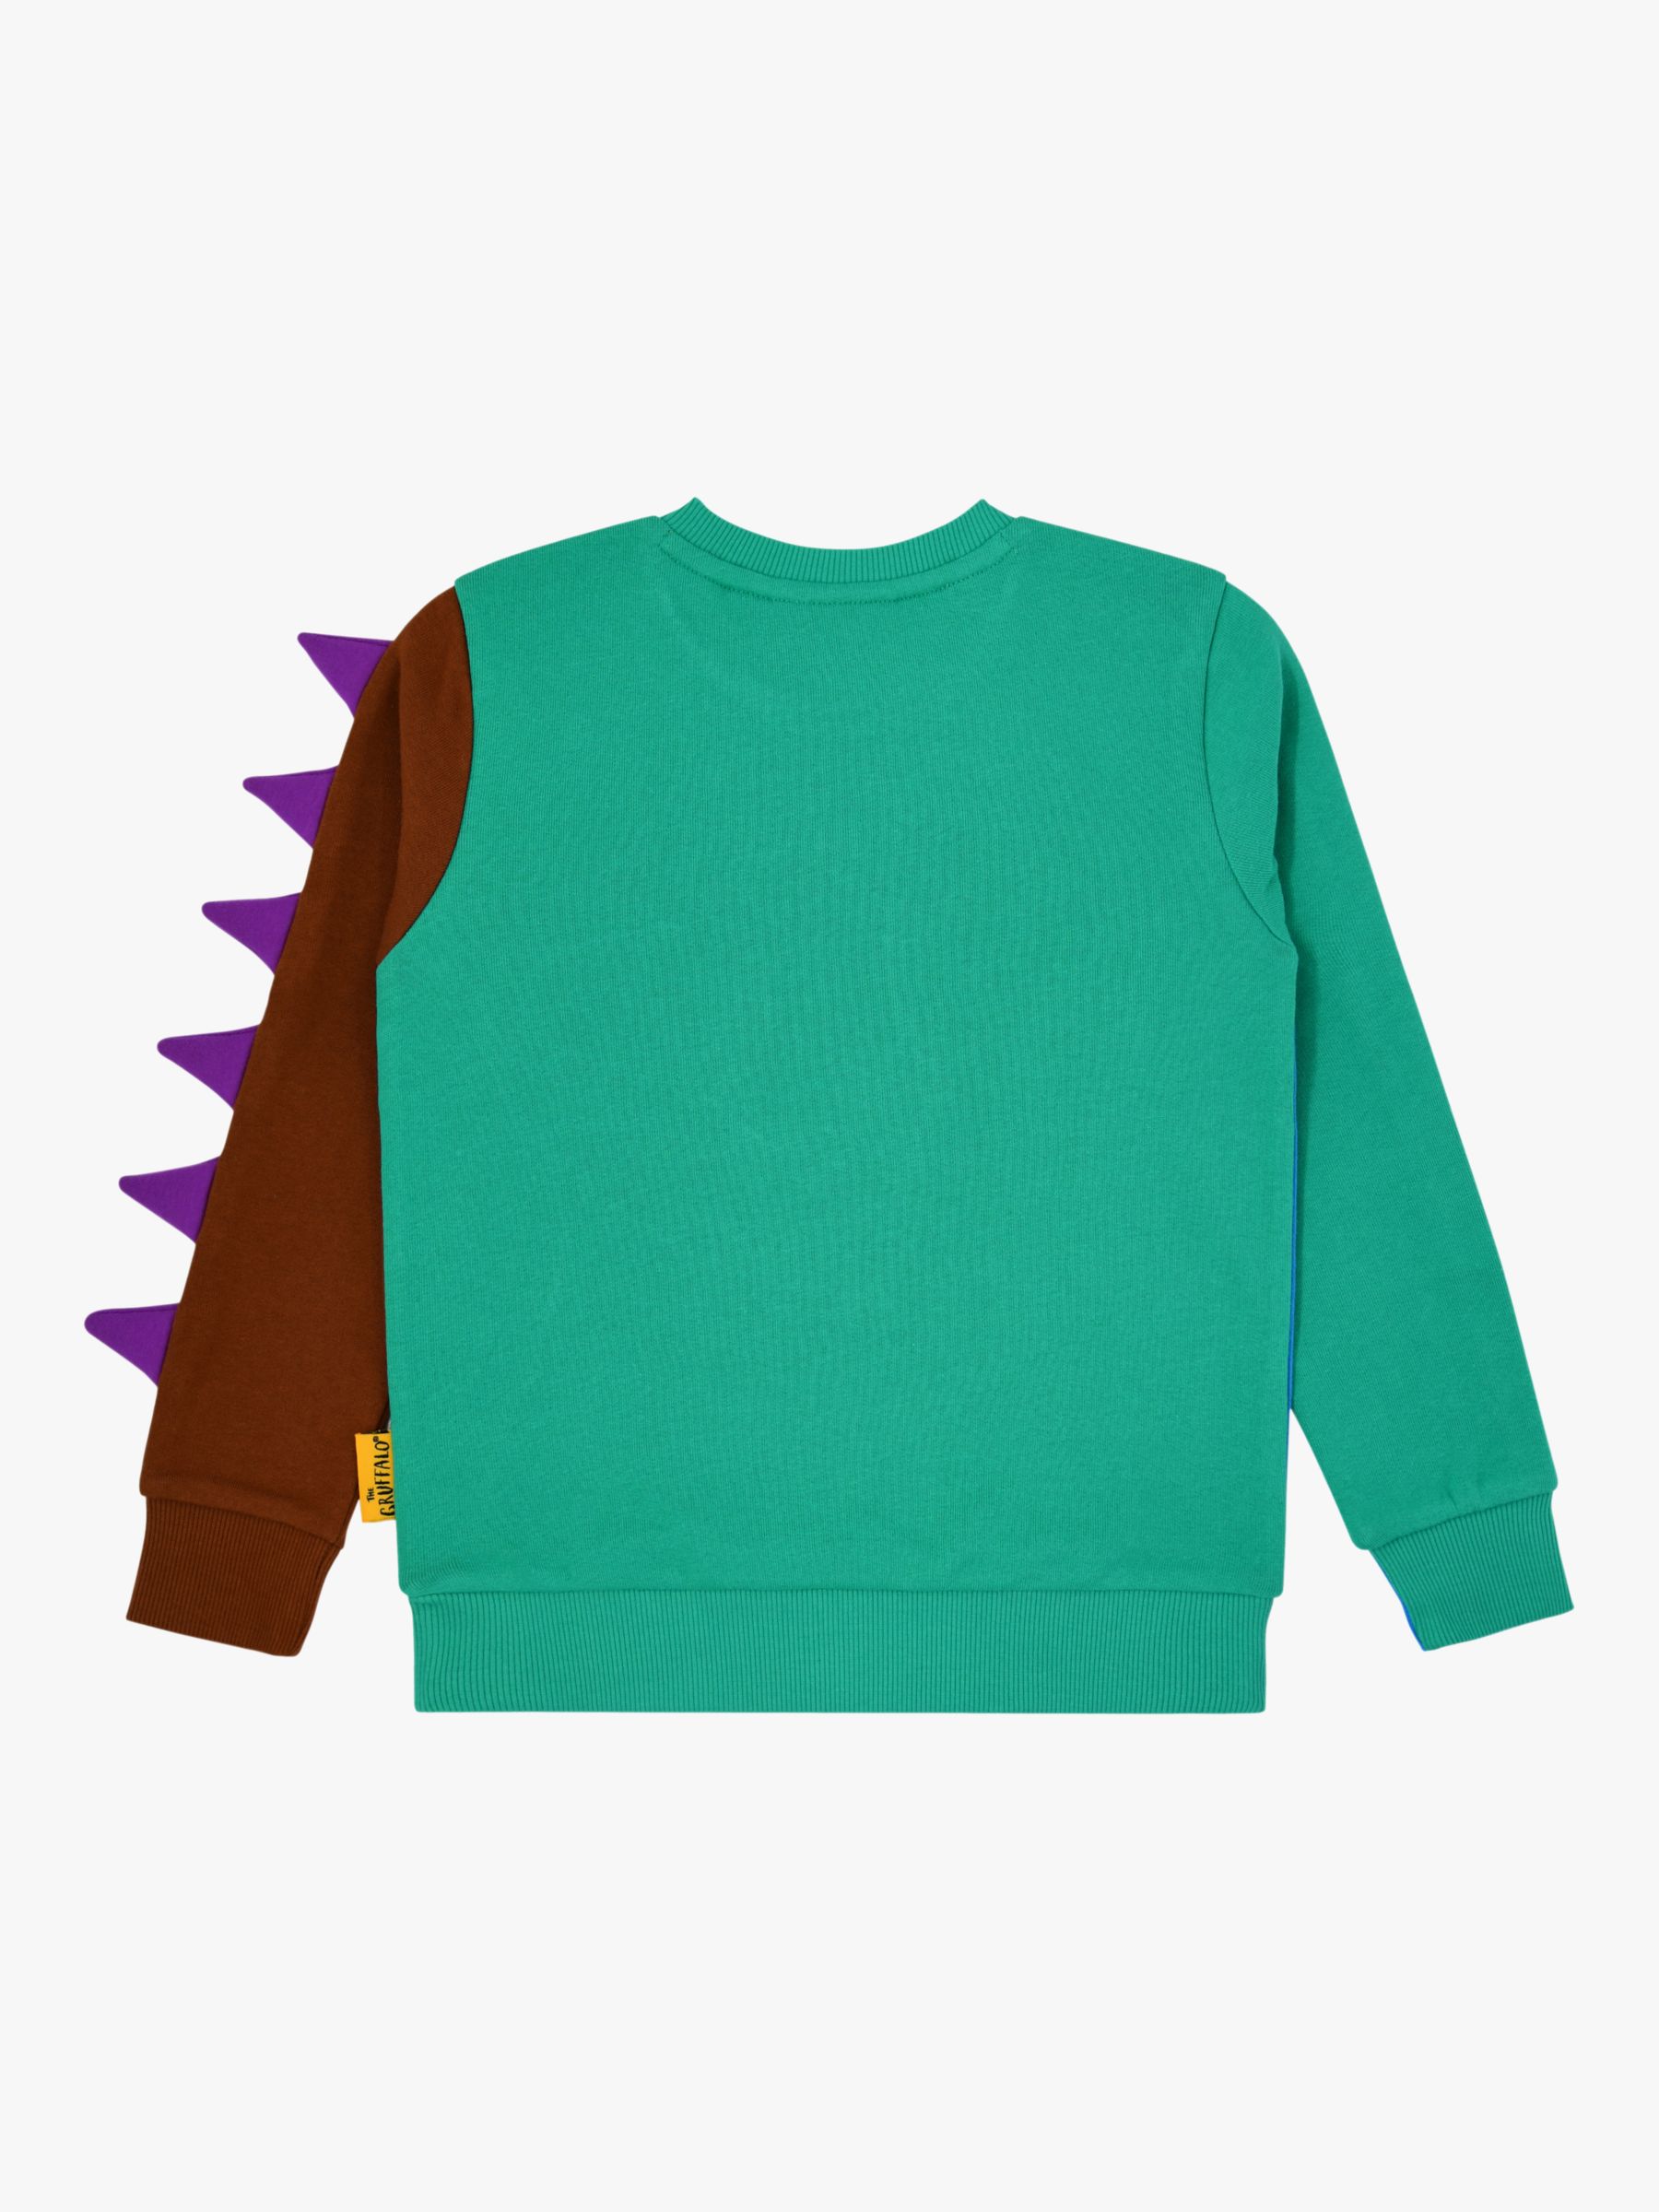 Fabric Flavours Kids' Gruffalo Sweatshirt, Multi, 1-2 years